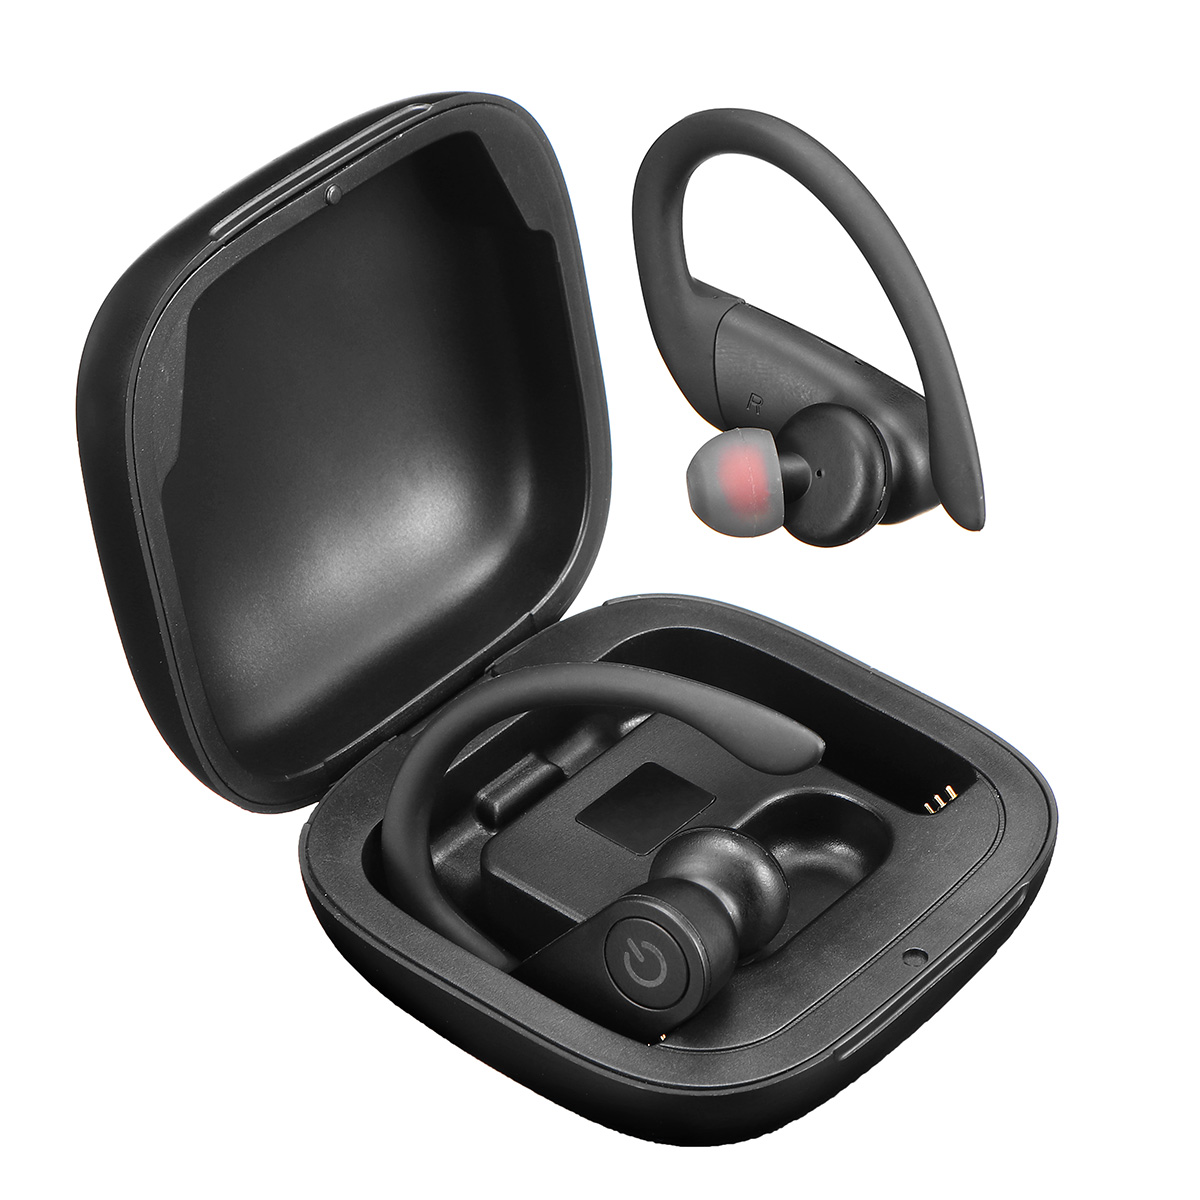 

B5 TWS True Wireless Stereo Earbuds bluetooth 5.0 Ear Hook Earphone LED Display Headphones with Charging Case